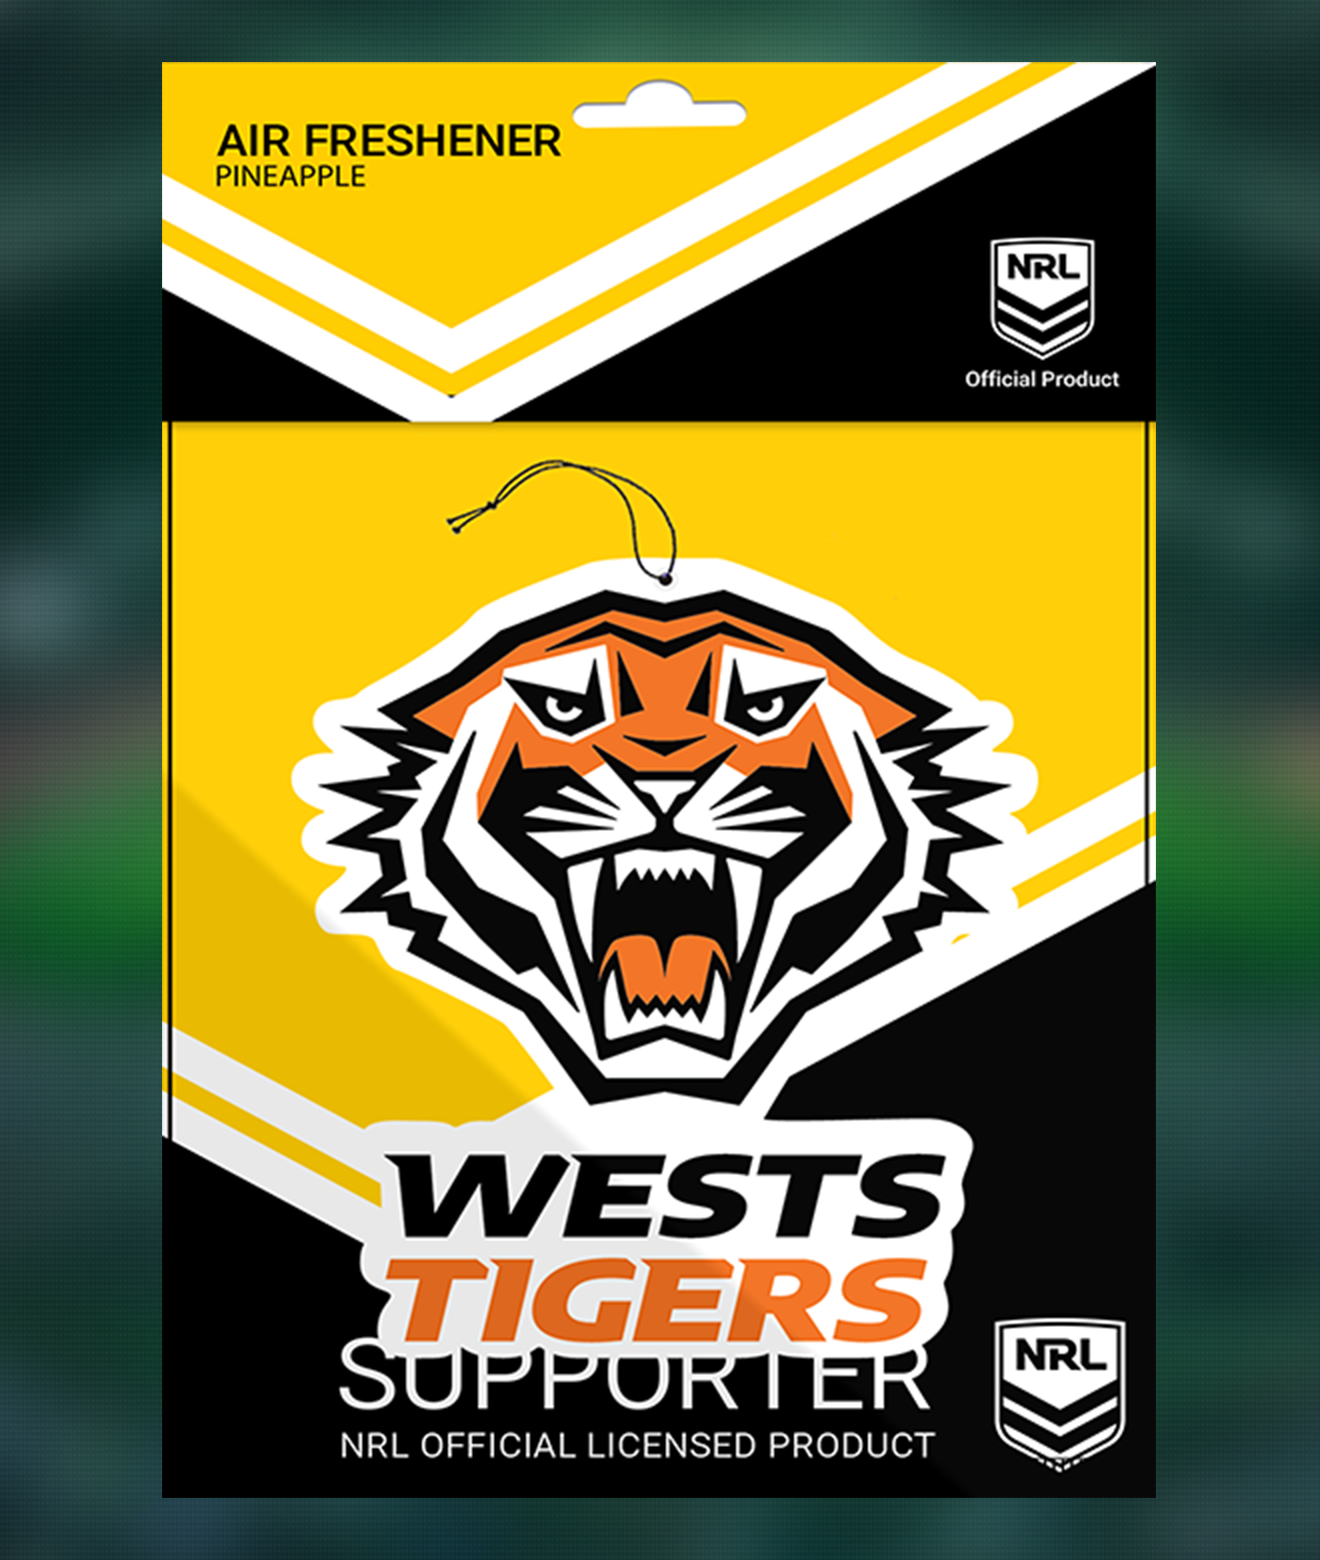 Wests Tigers Logo